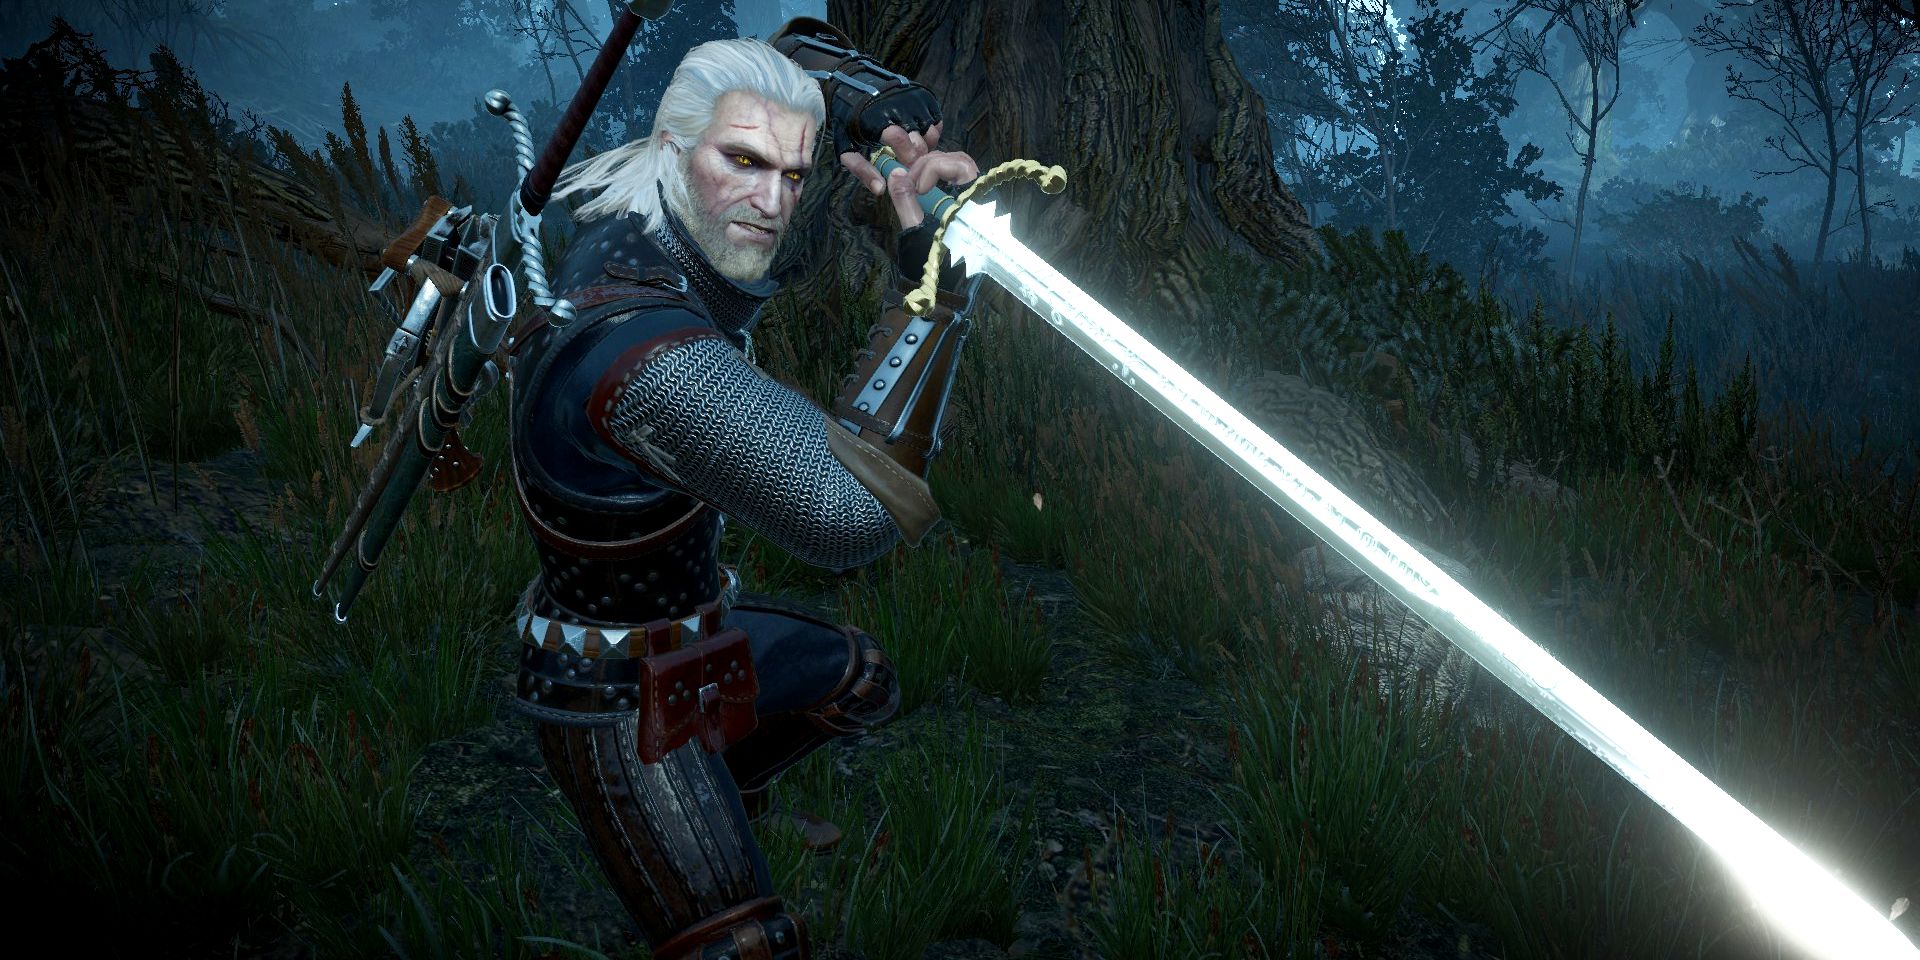 geralt holding a silver sword in battle stance.